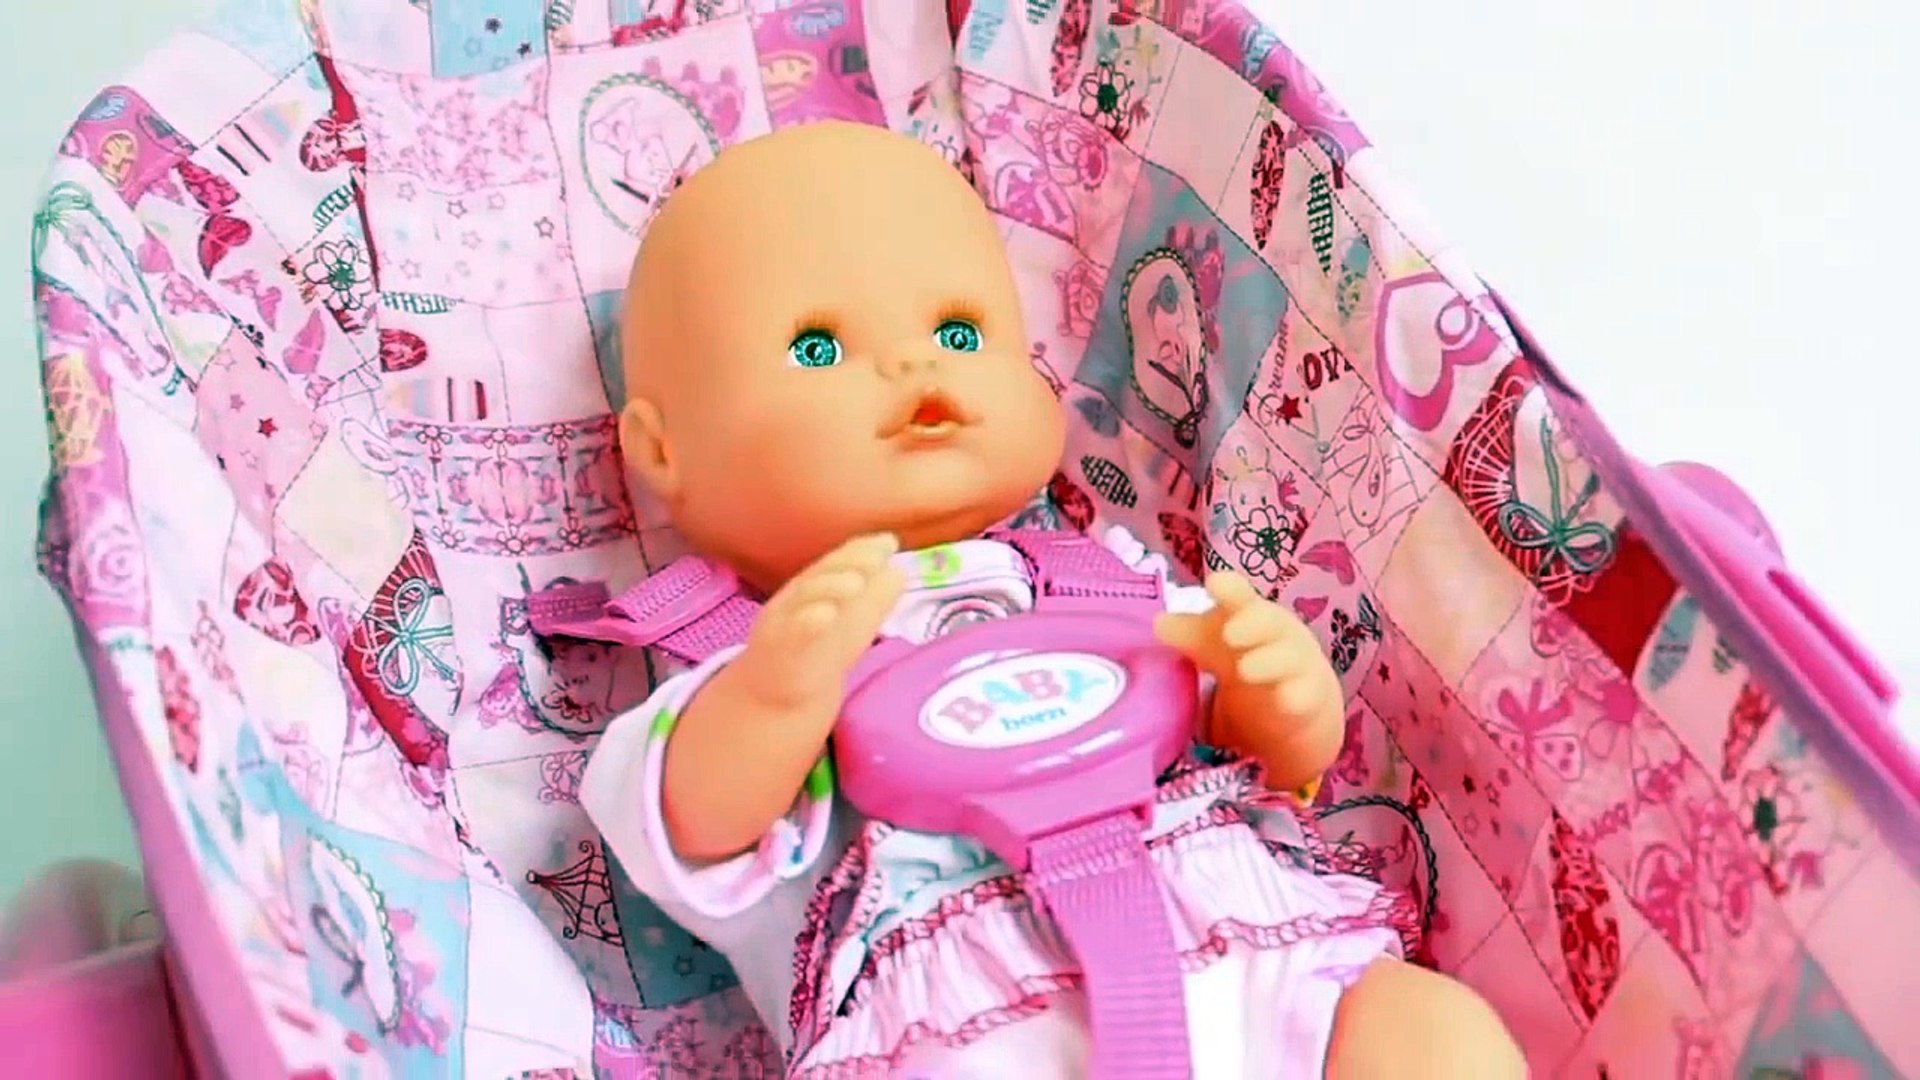 Baby Sleep With Me Baby Doll Cradle Miyo Cuna Bebés How To Sleep a Baby Doll Crib Toy - Video